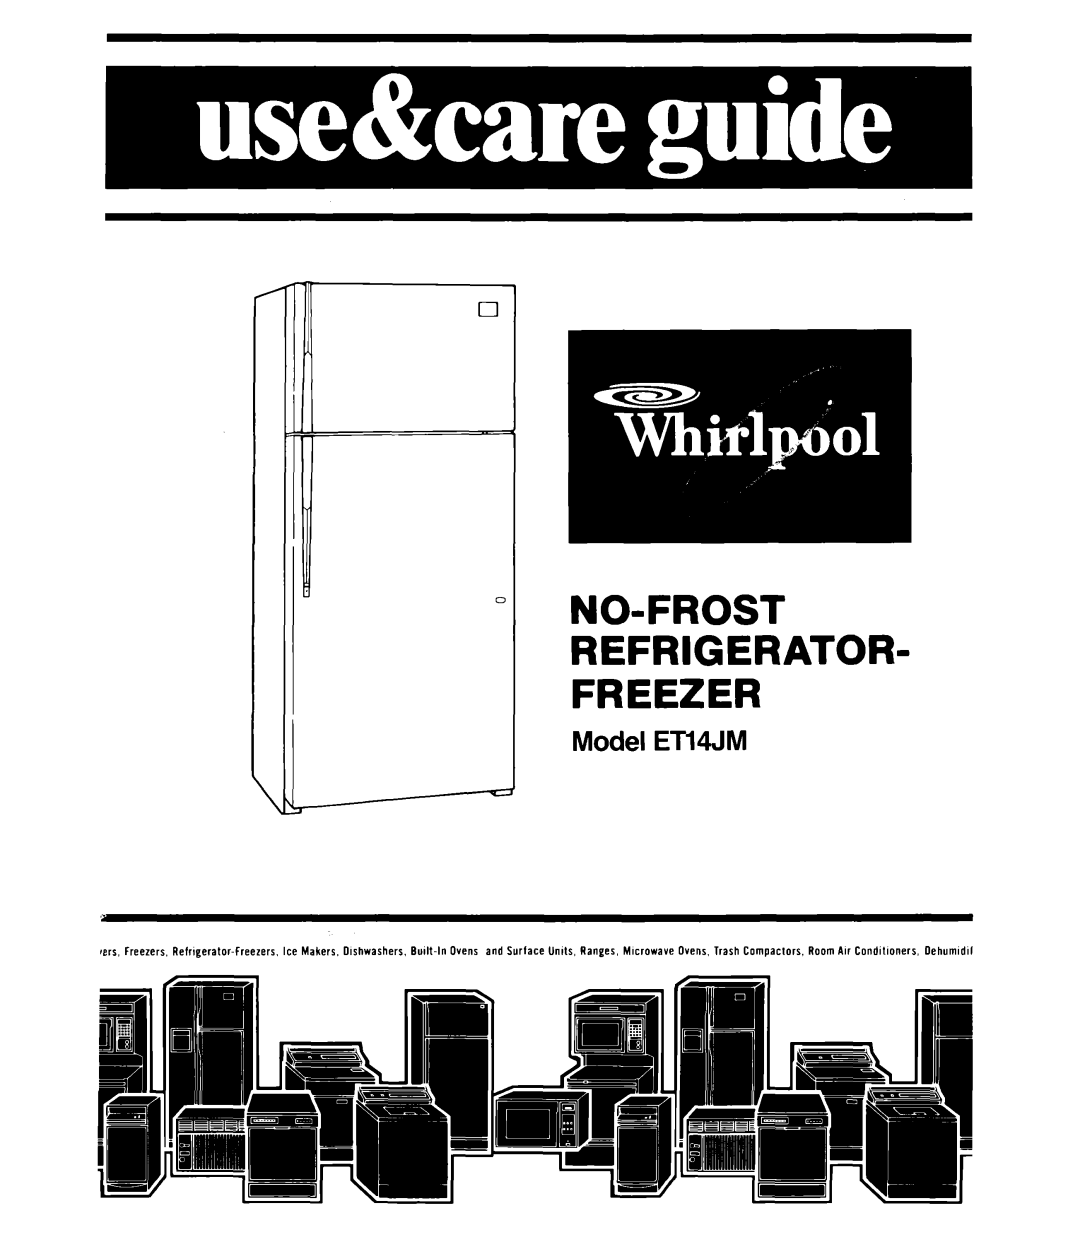 Whirlpool ETWM ws manual No-Frost Refrigerator Freezer, Model ETWM 